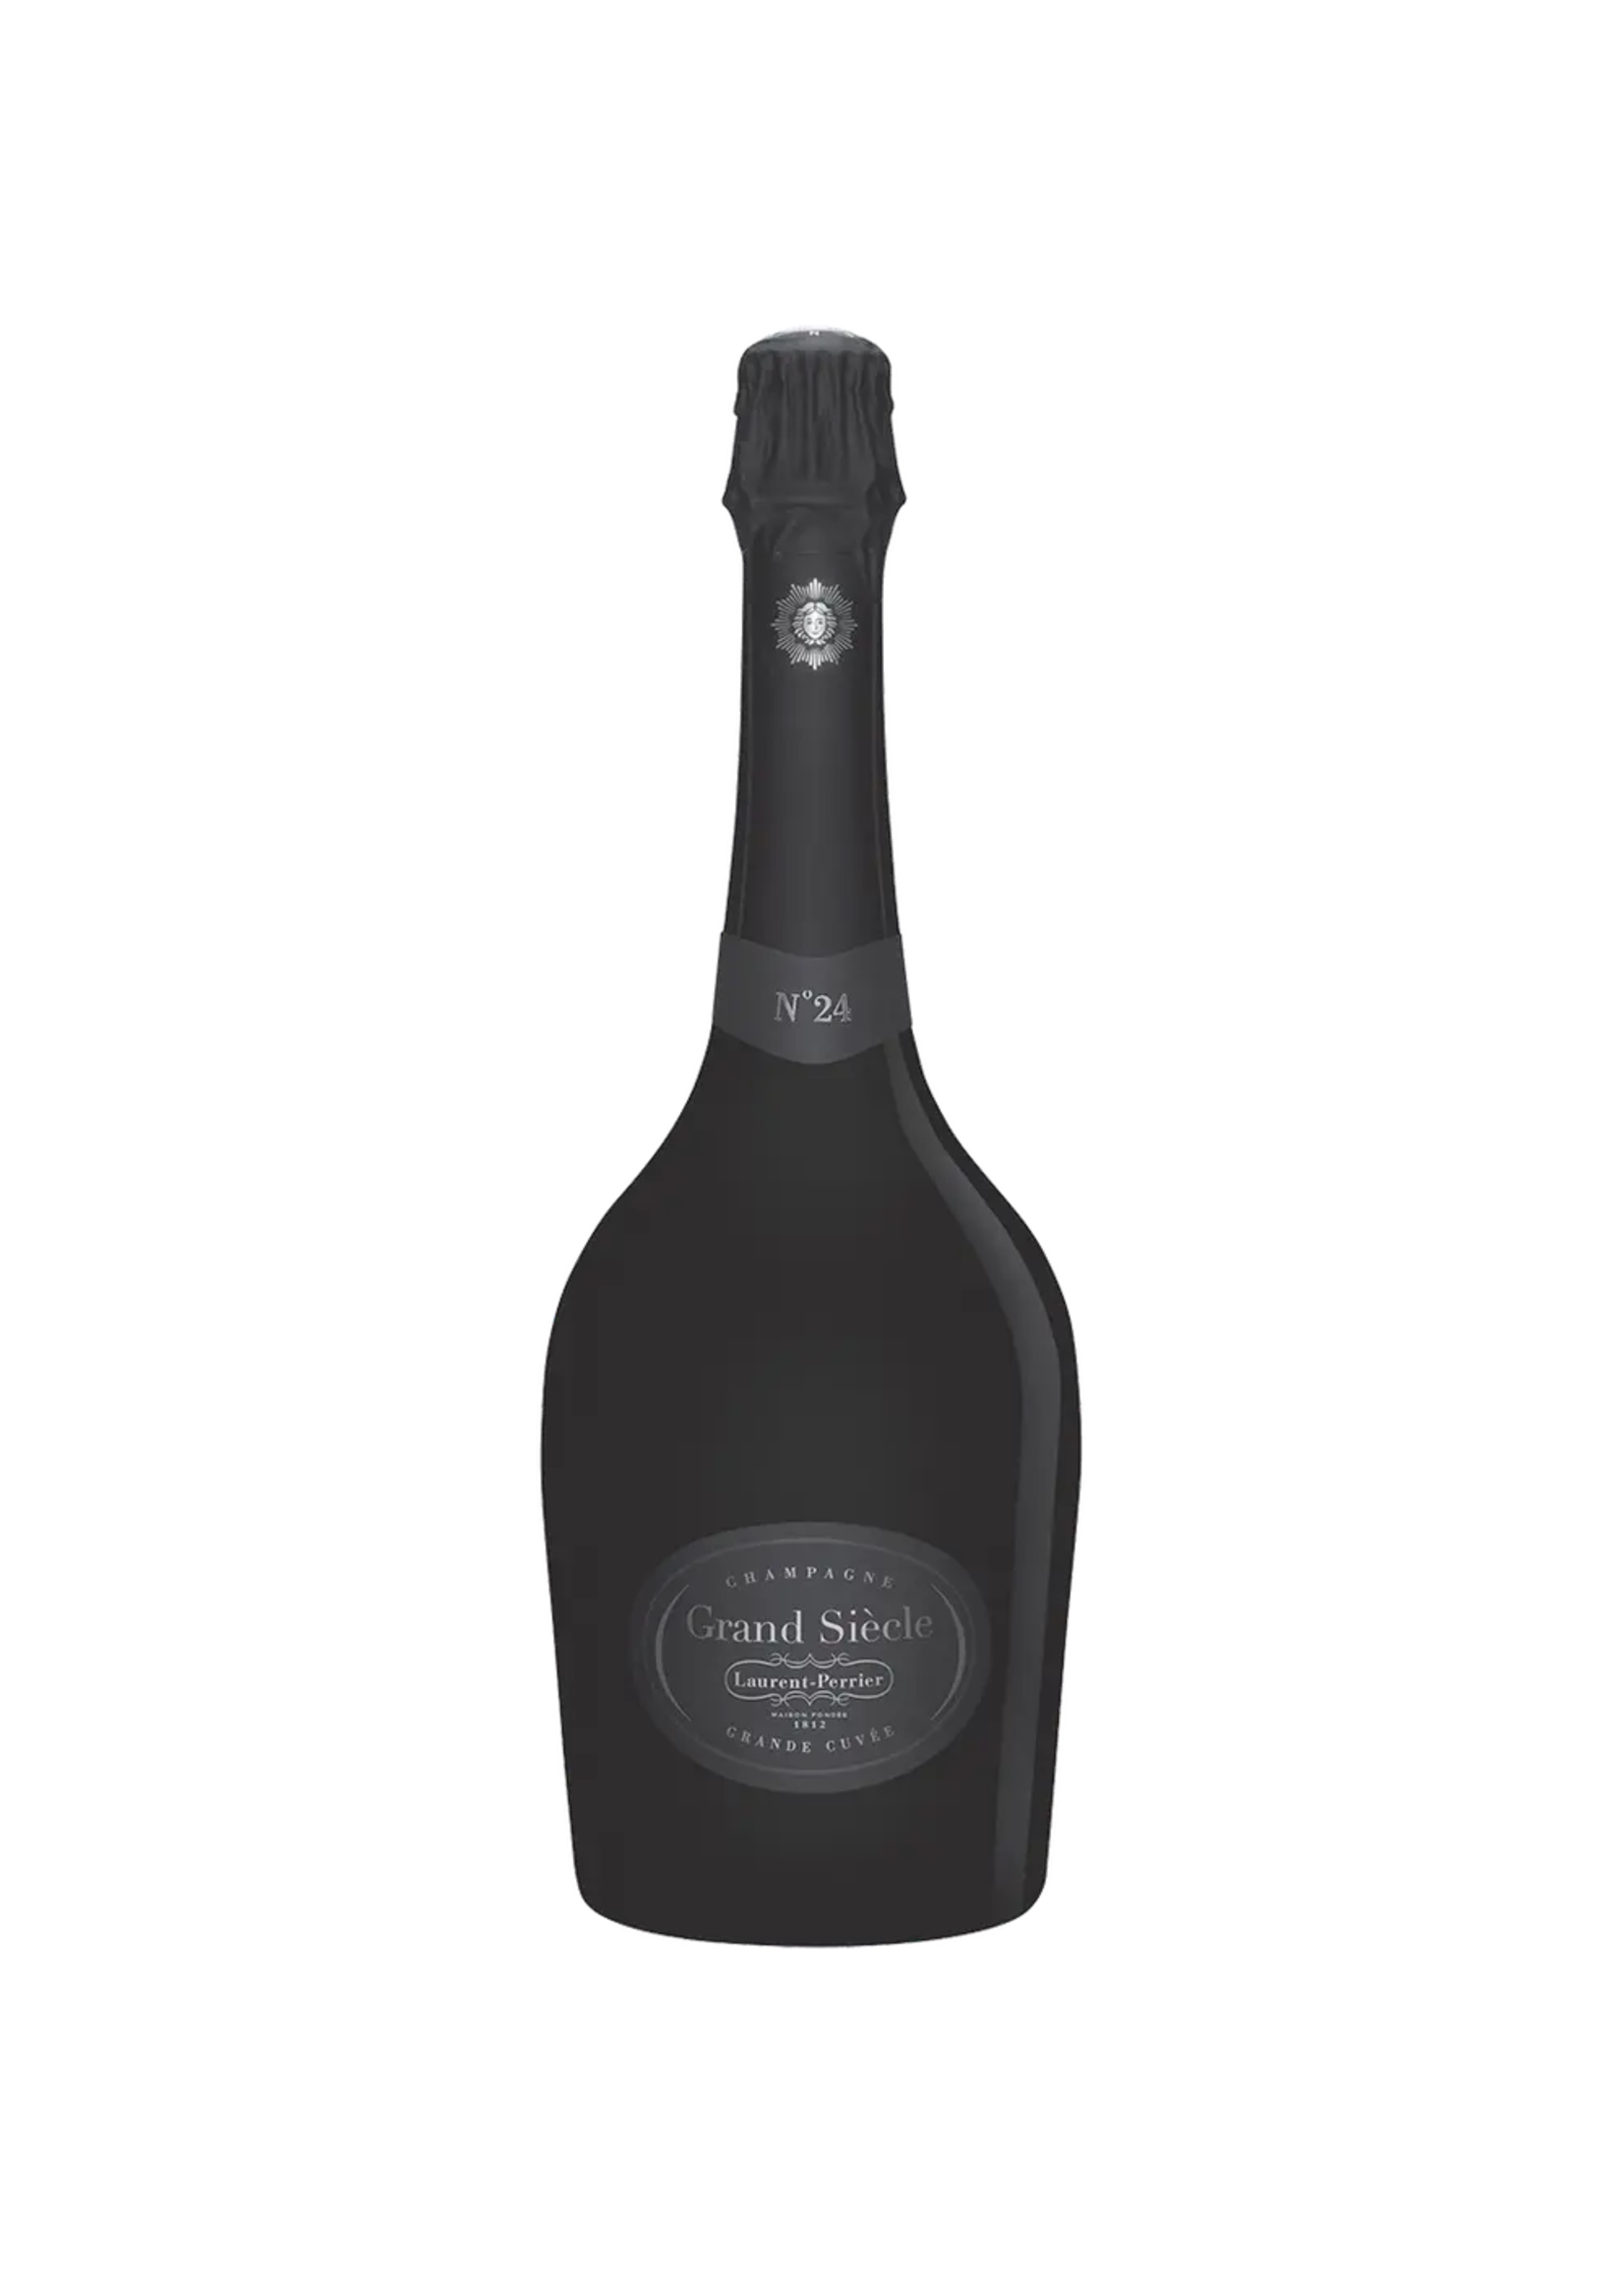 Laurent Perrier Grand Siecle Grand Cuvee Champagne 750ml